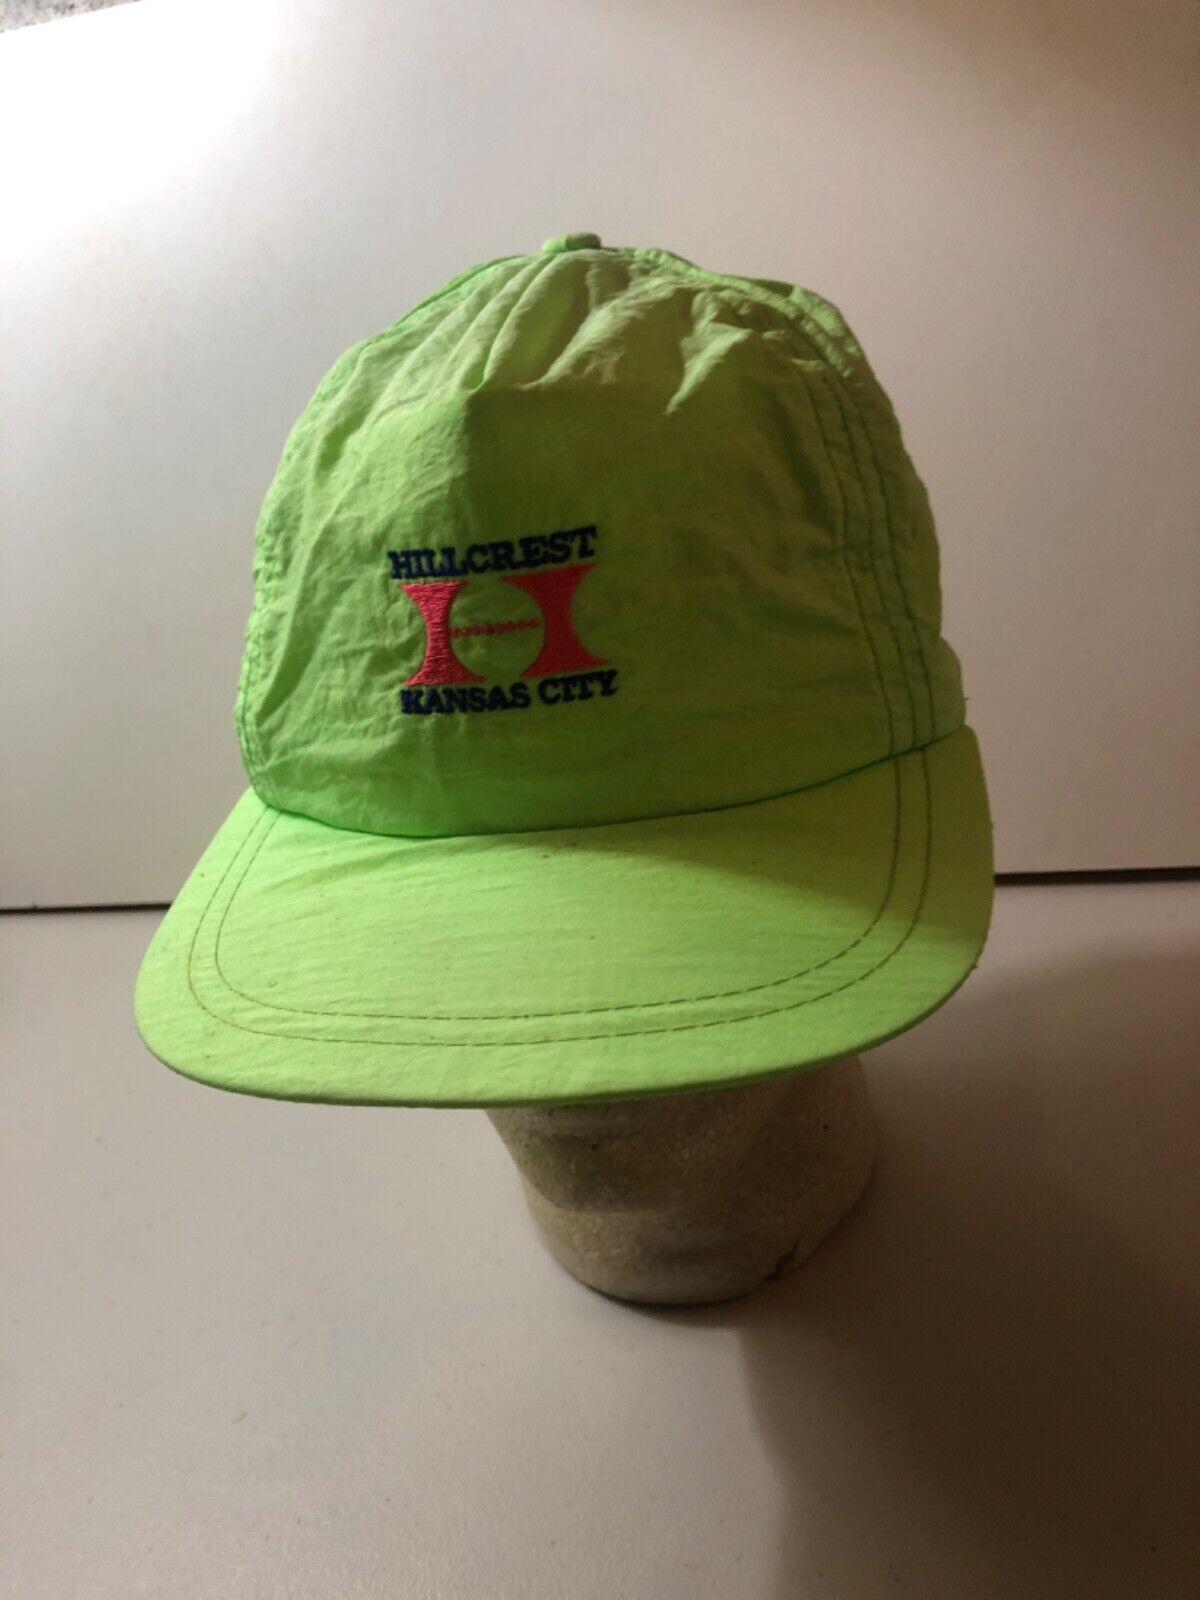 Vintage Hillcrest Kansas City Neon Adjustable Hat